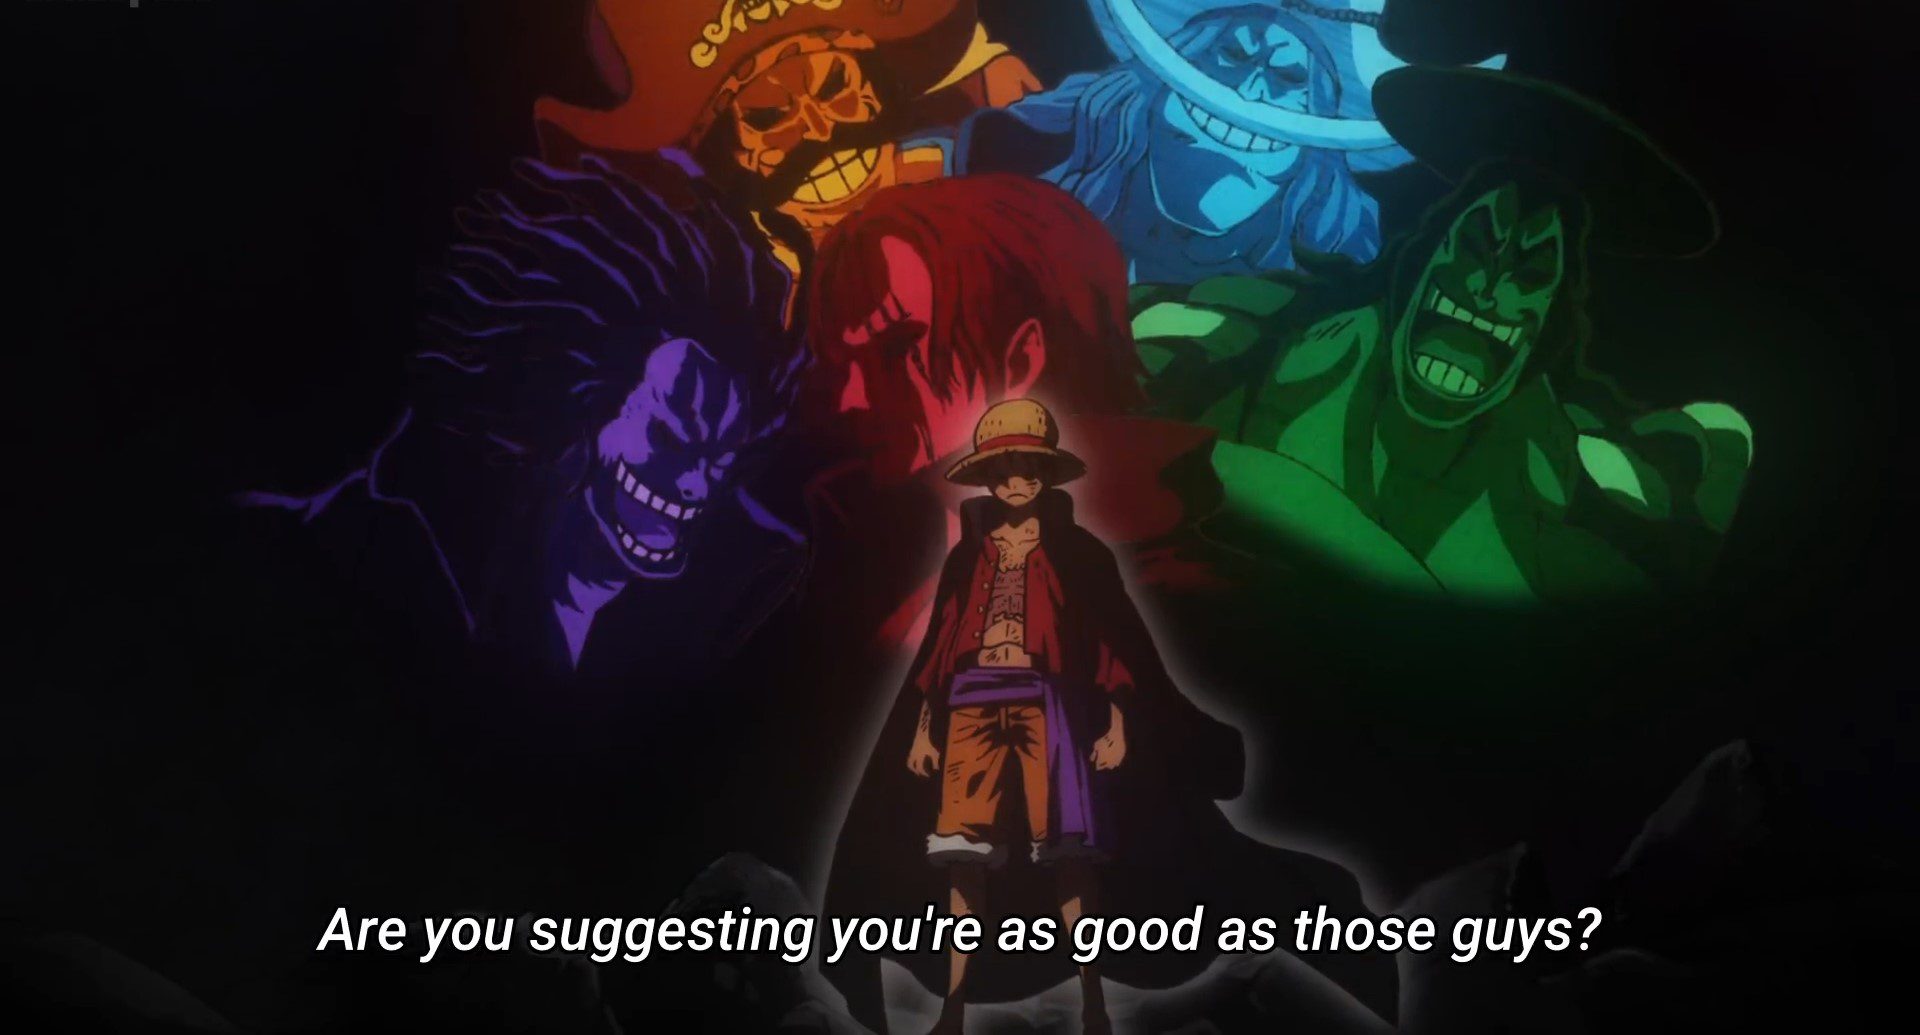 Screenshot of One Piece Episode 1016 